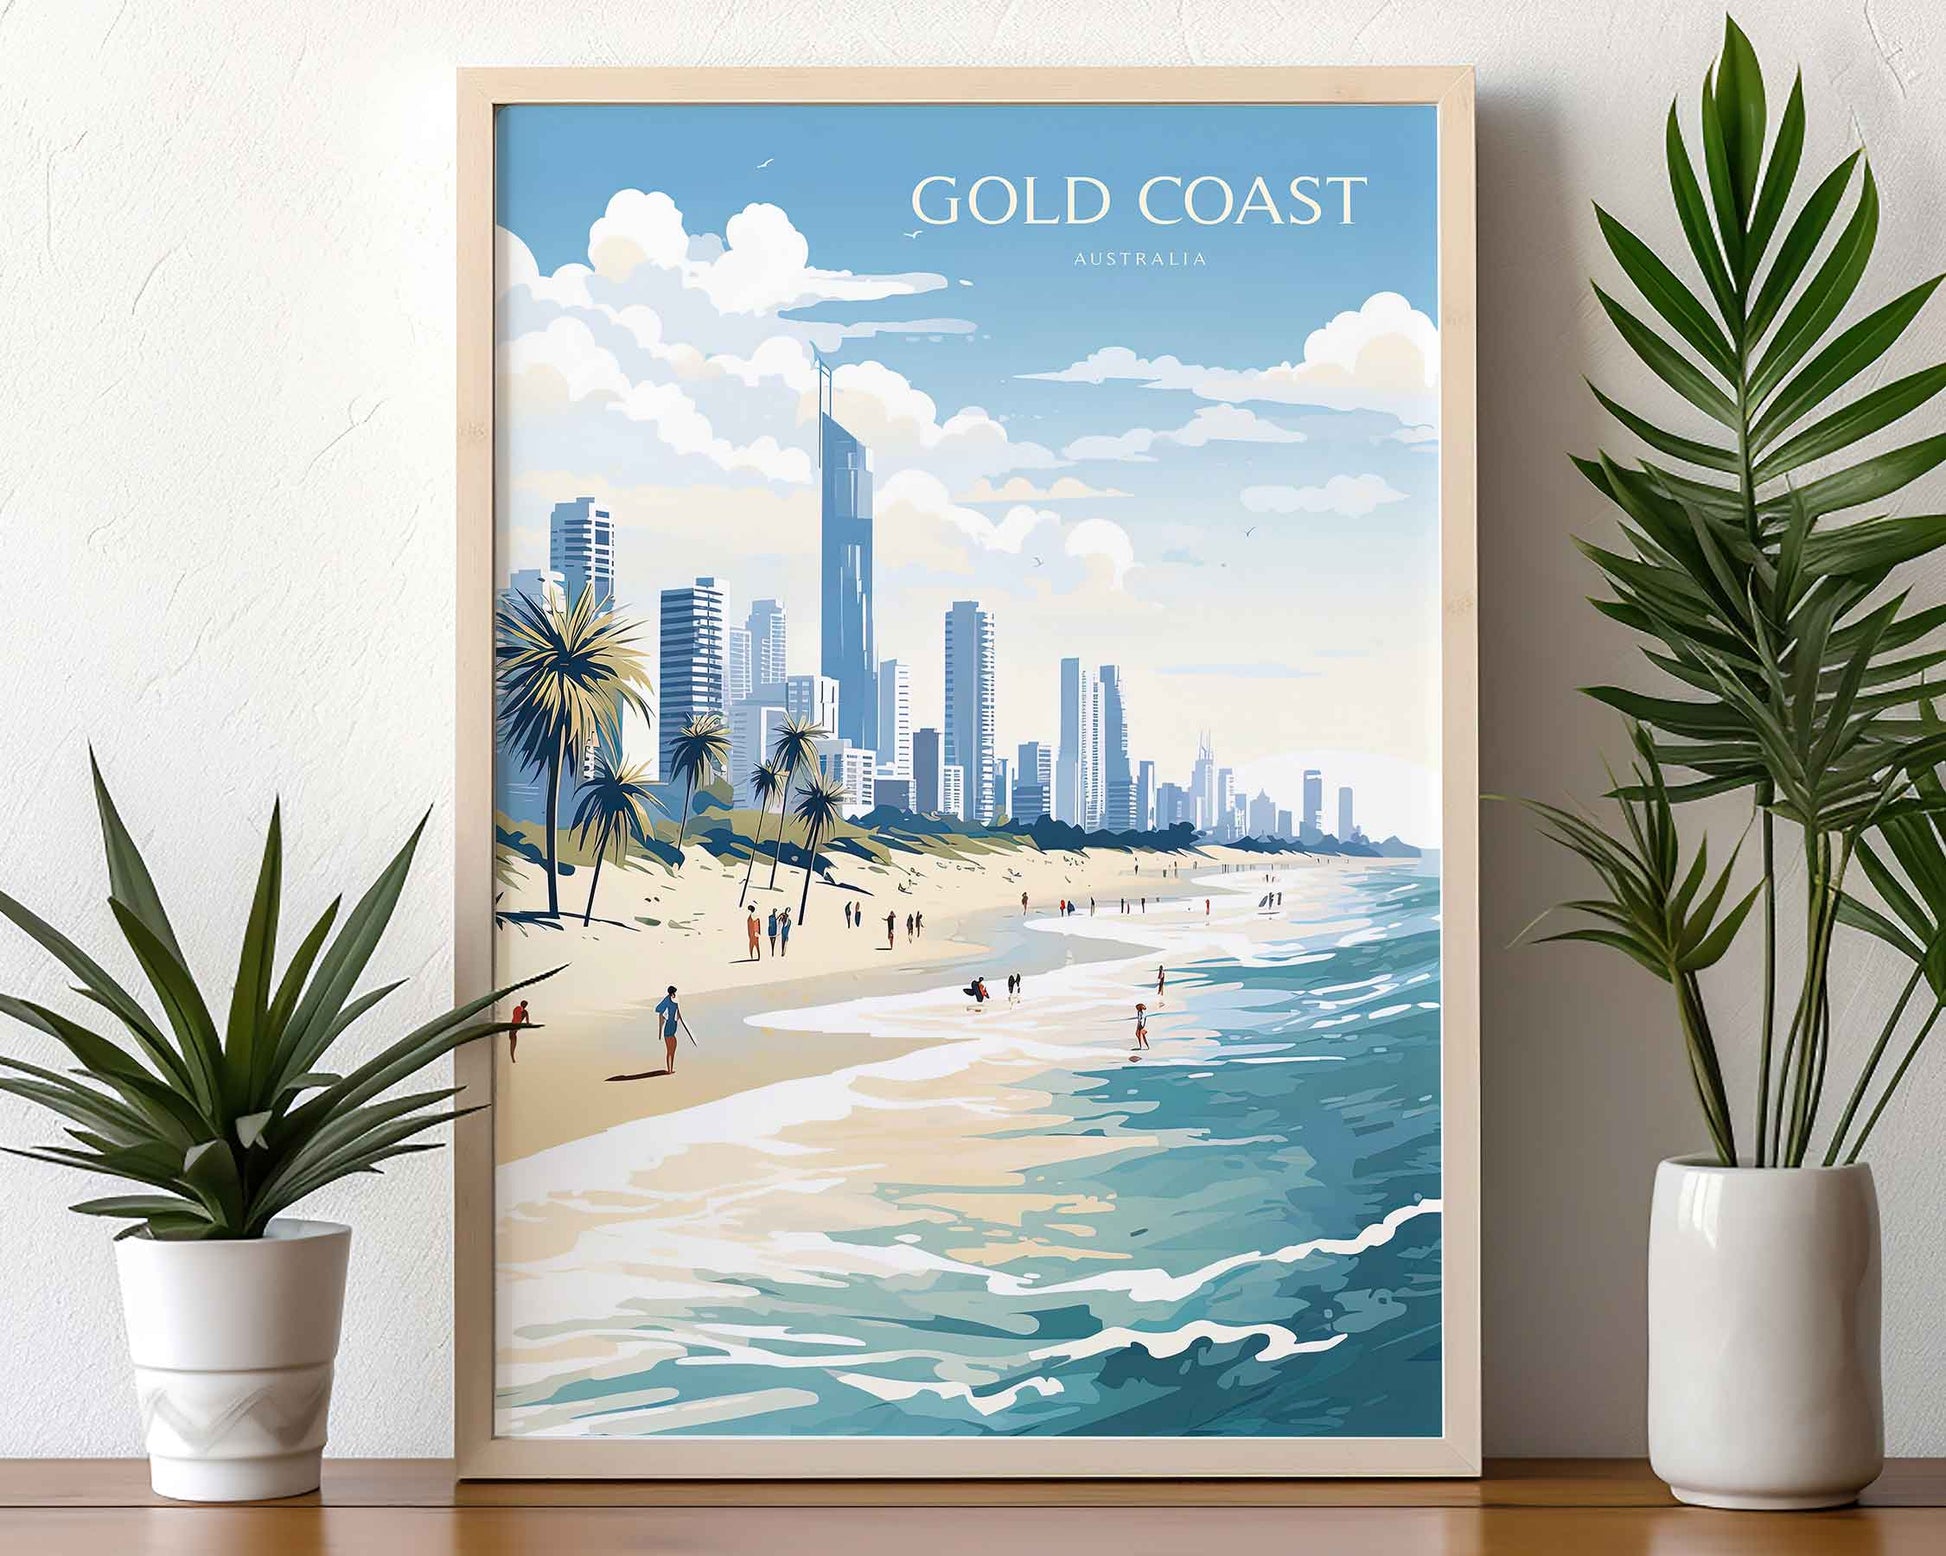 Framed Image of Gold Coast Australia Travel Poster Prints Illustration Wall Art